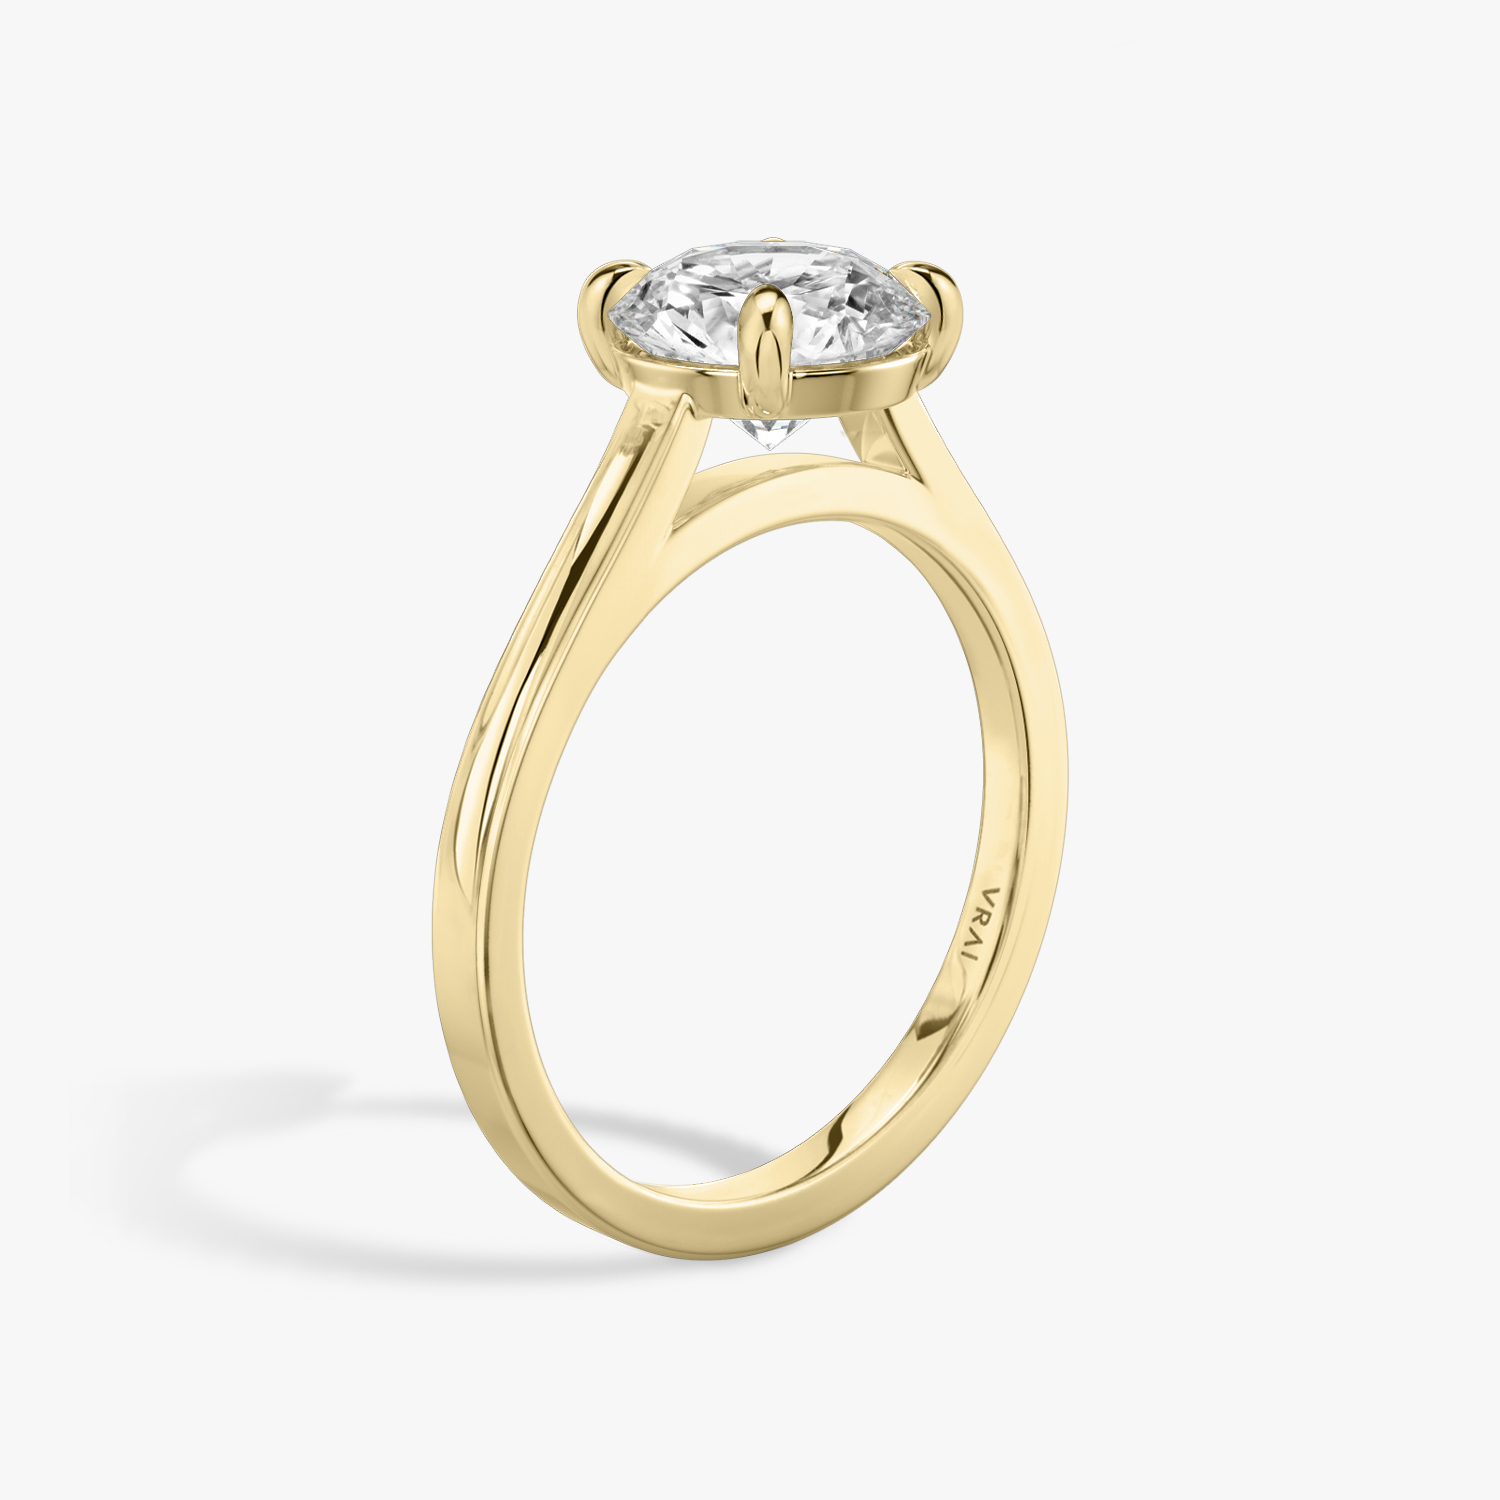 Mans SOLID 14k white yellow gold 1/2 carat diamond Handsome Ring size 10.5  , 9g | eBay